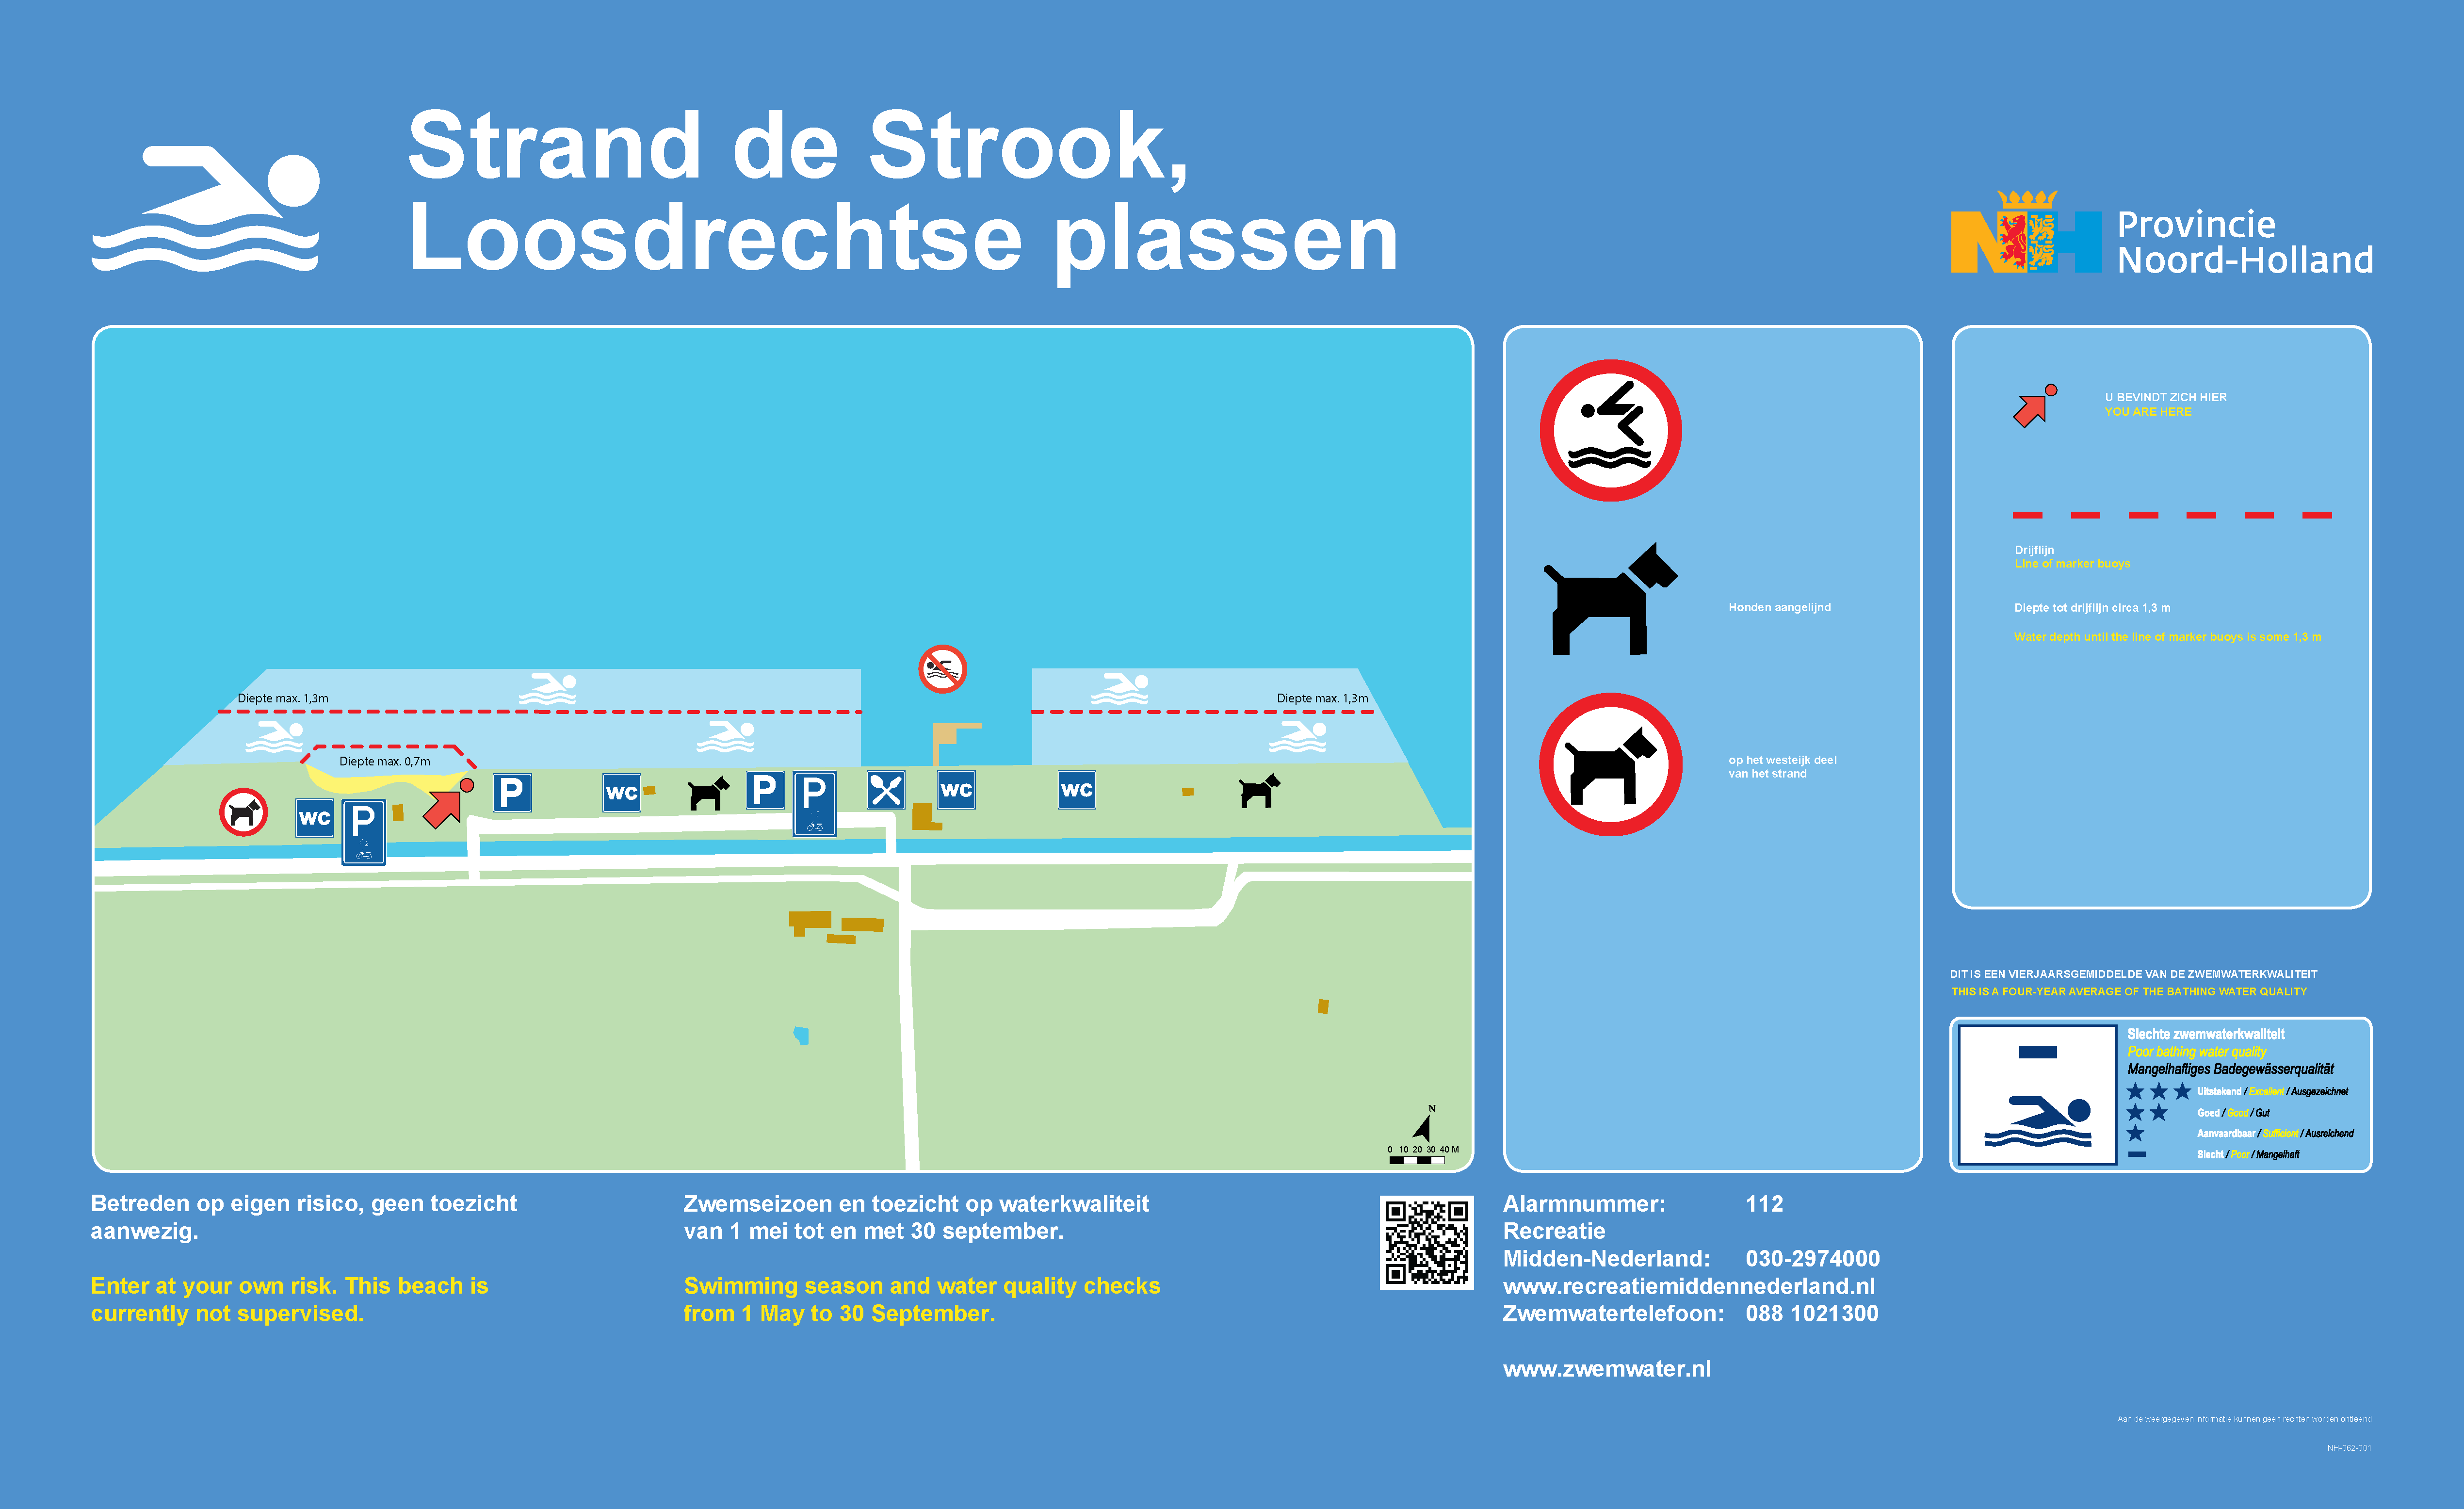 The information board at the swimming location Strand De Strook, Loosdrechtse plassen